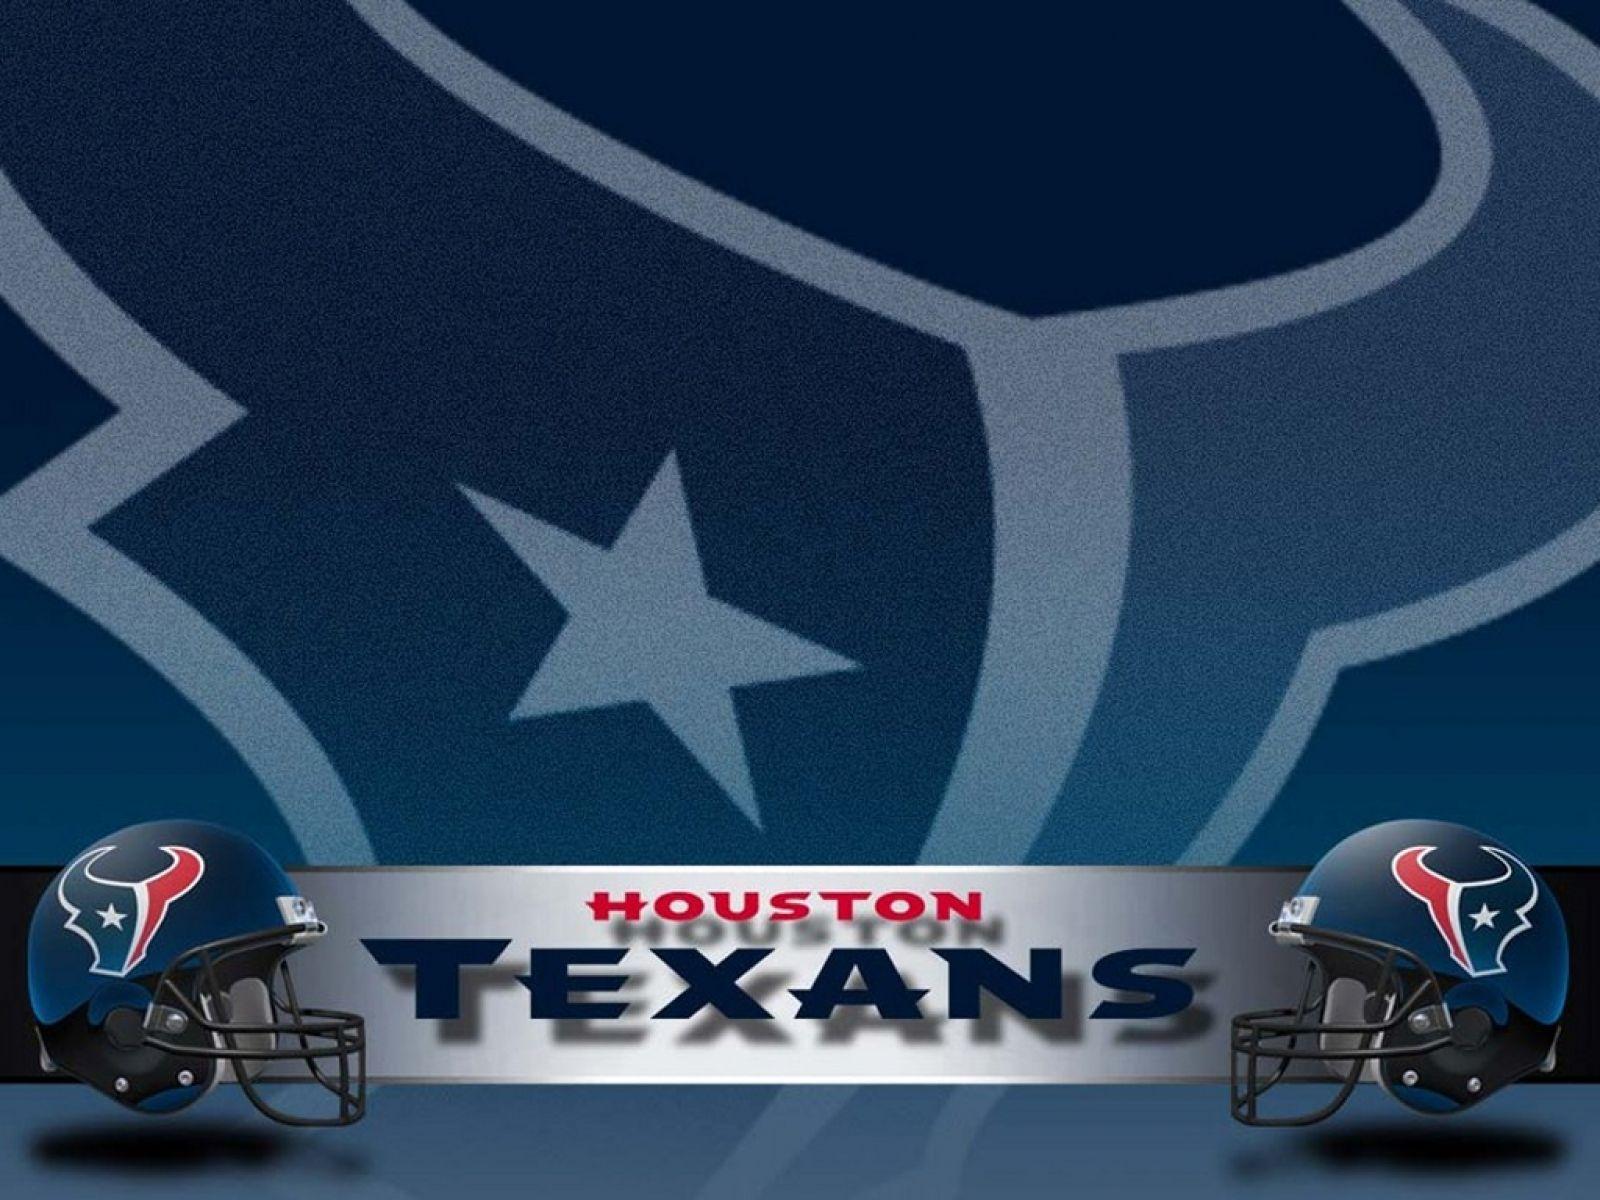 Houston Texans Wallpaper 2014. Sky HD Wallpaper